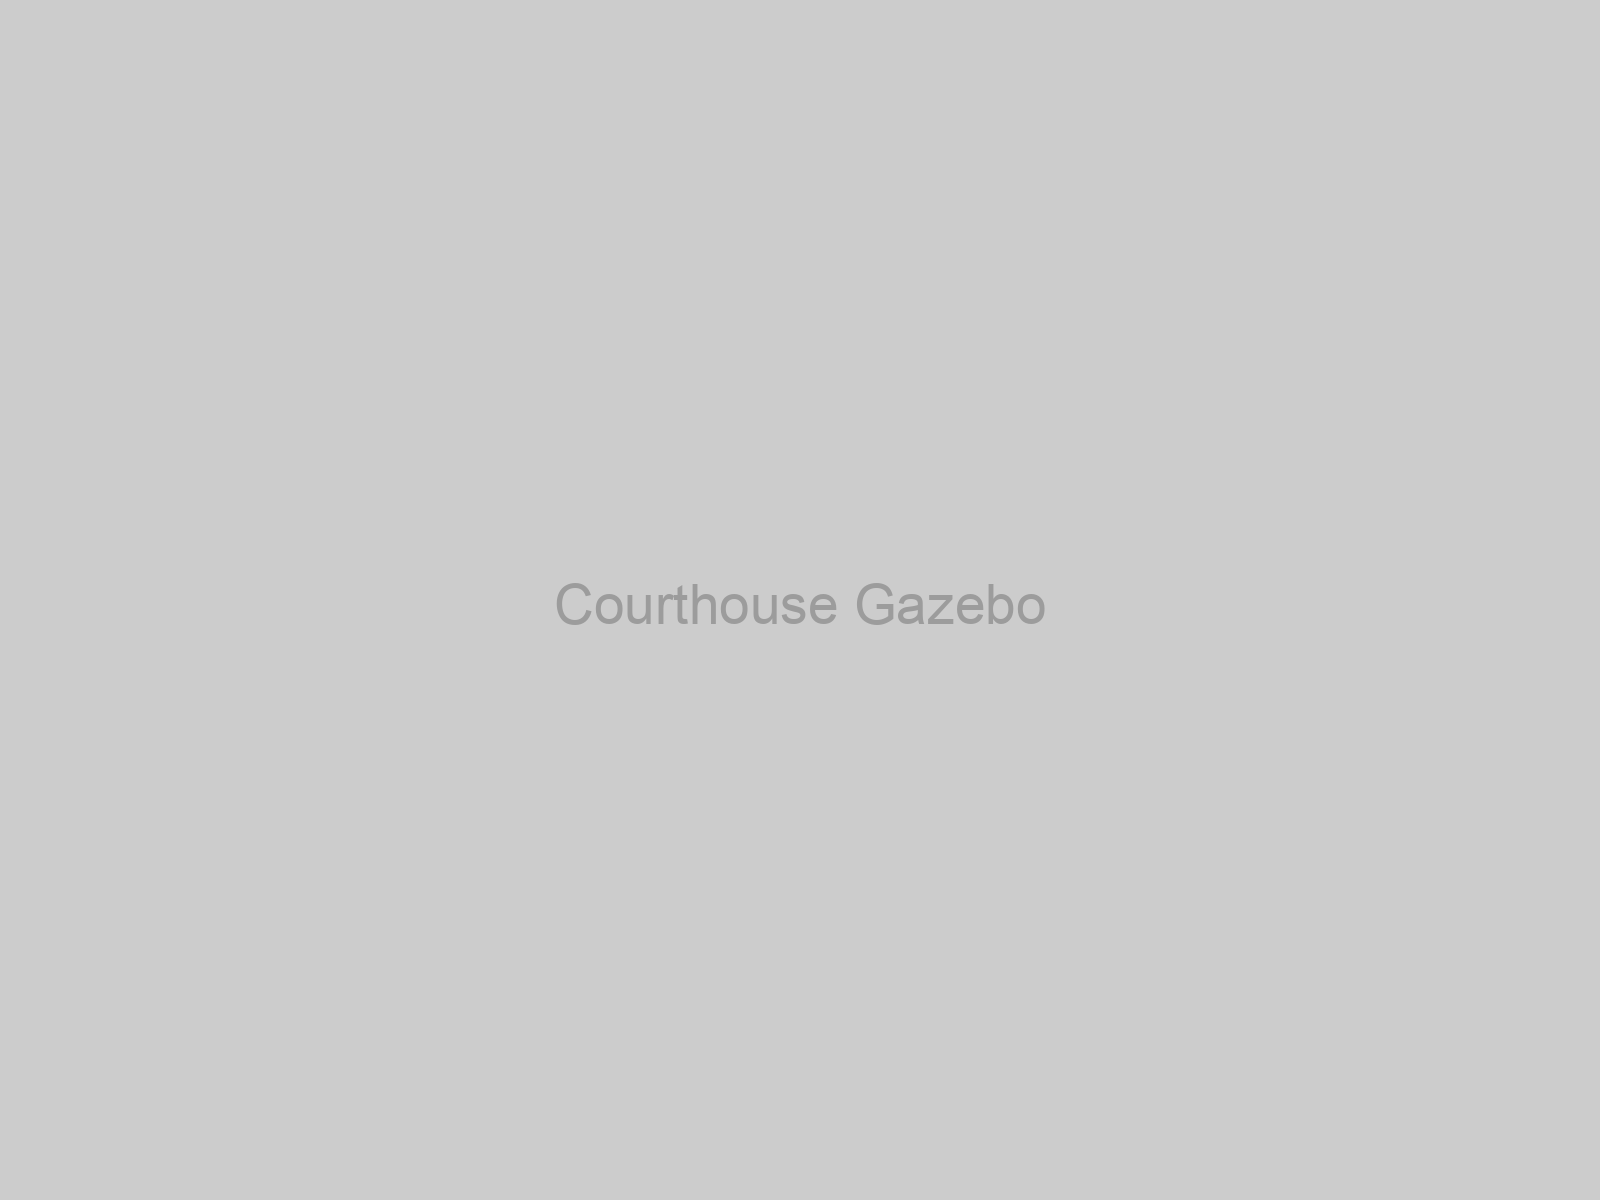 Courthouse Gazebo